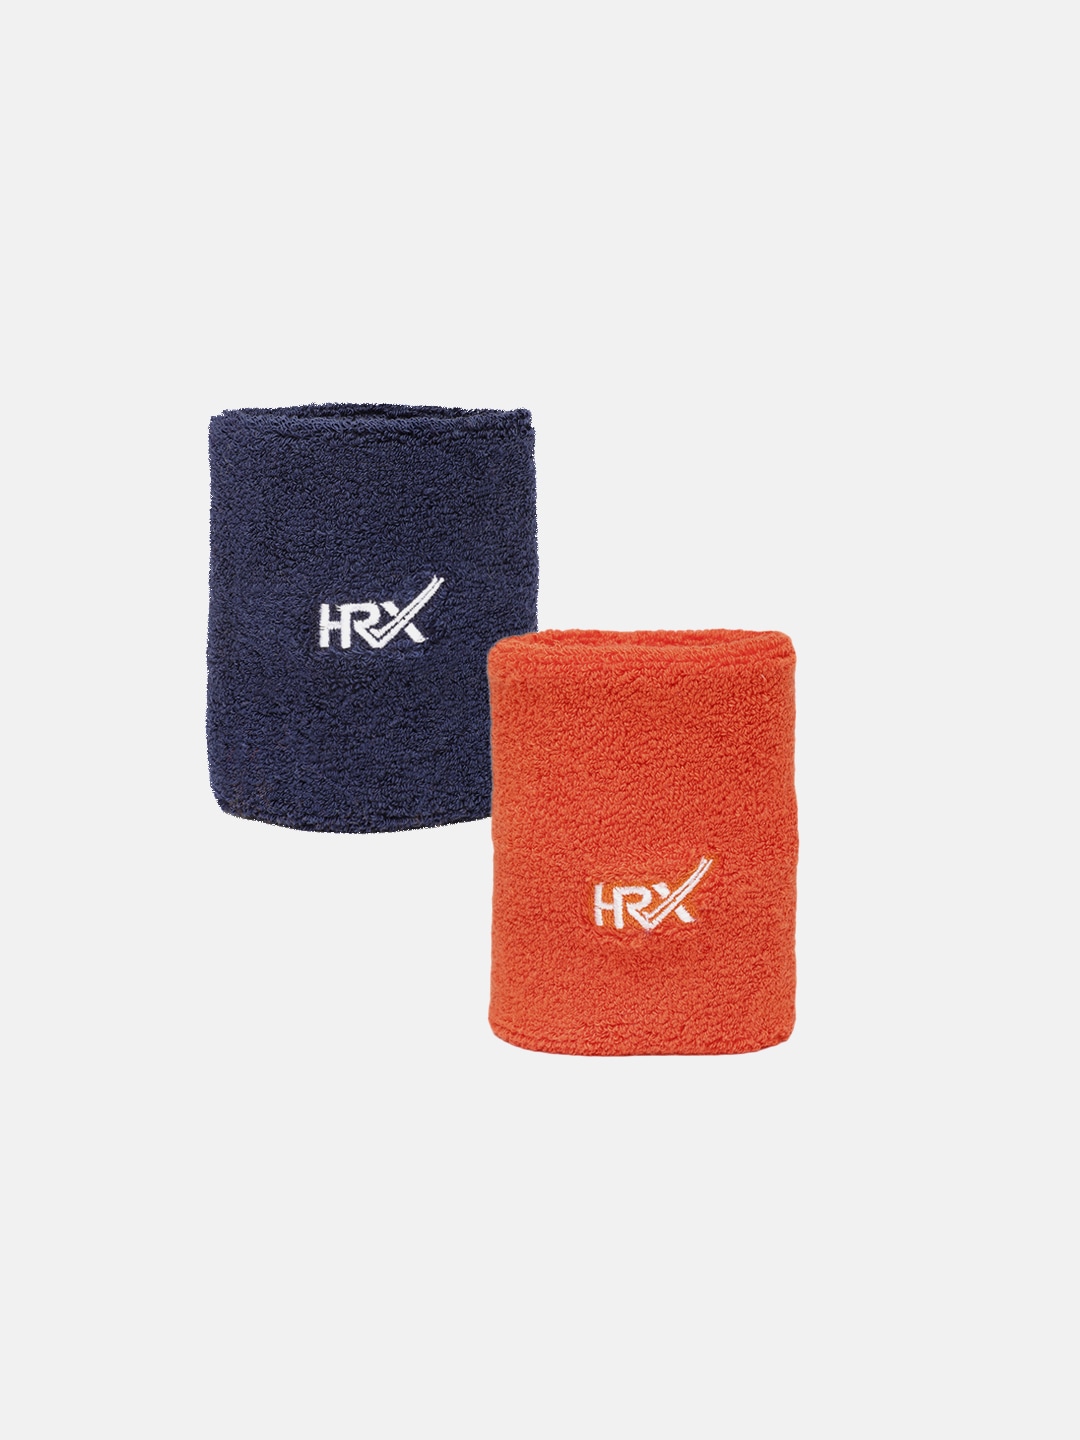 HRX by Hrithik Roshan Unisex Set of 2 Navy Blue & Orange Performance Wristbands Price in India